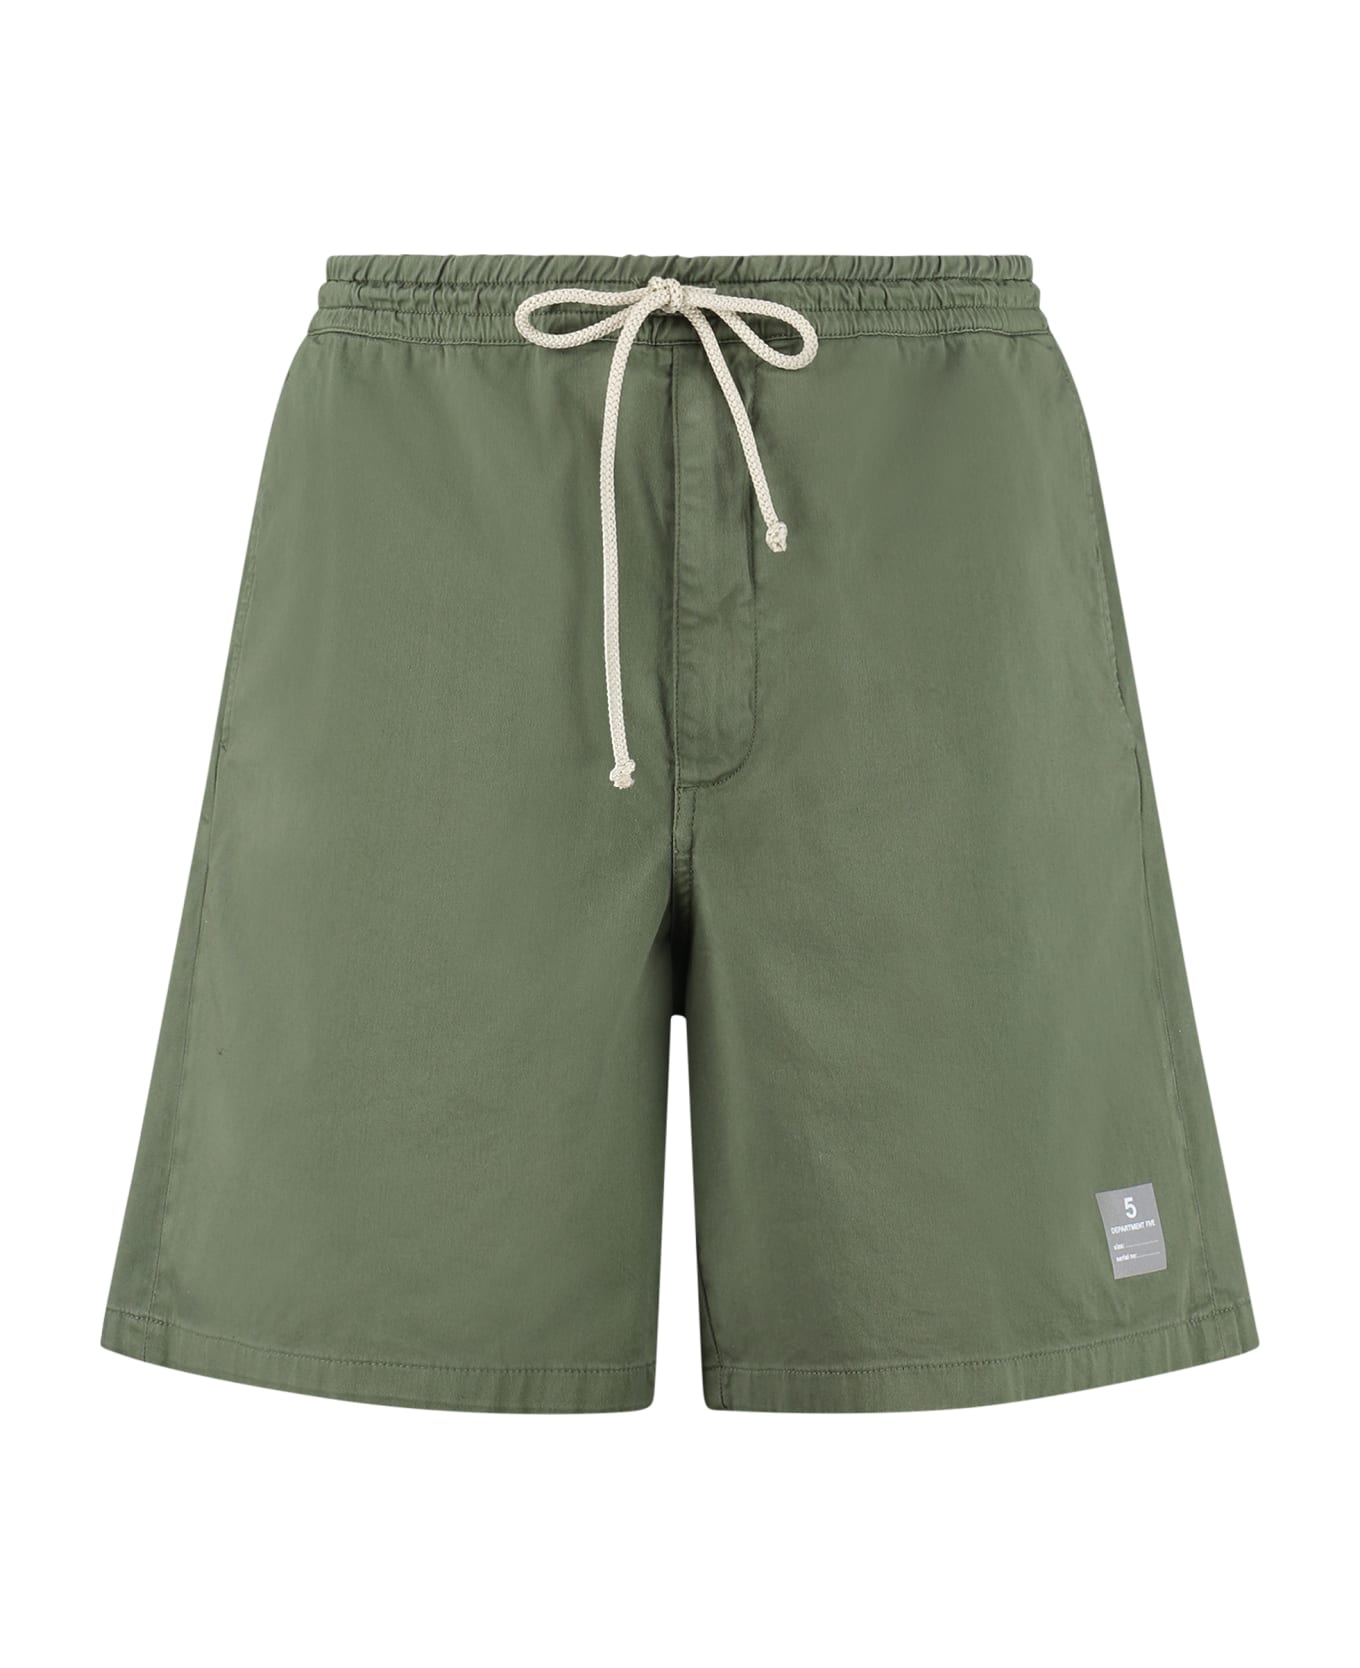 Department Five Collins Cotton Bermuda Shorts - green ショートパンツ